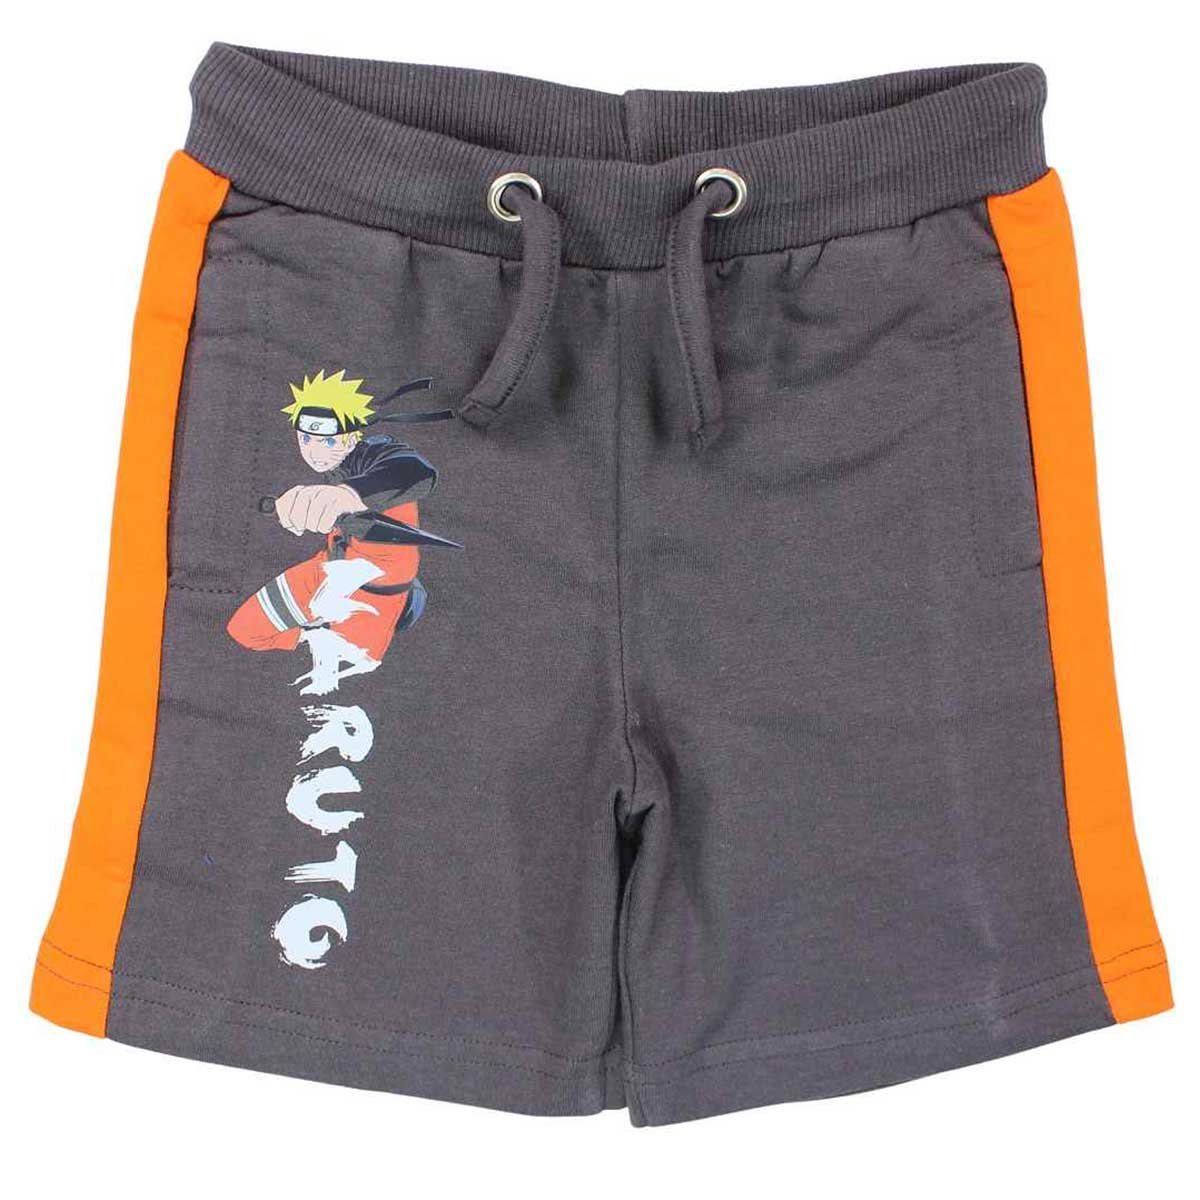 Naruto Shorts Naruto Shippuden Kinder Jungen Shorts 100% Baumwolle Gr. 110 bis 152 Grau